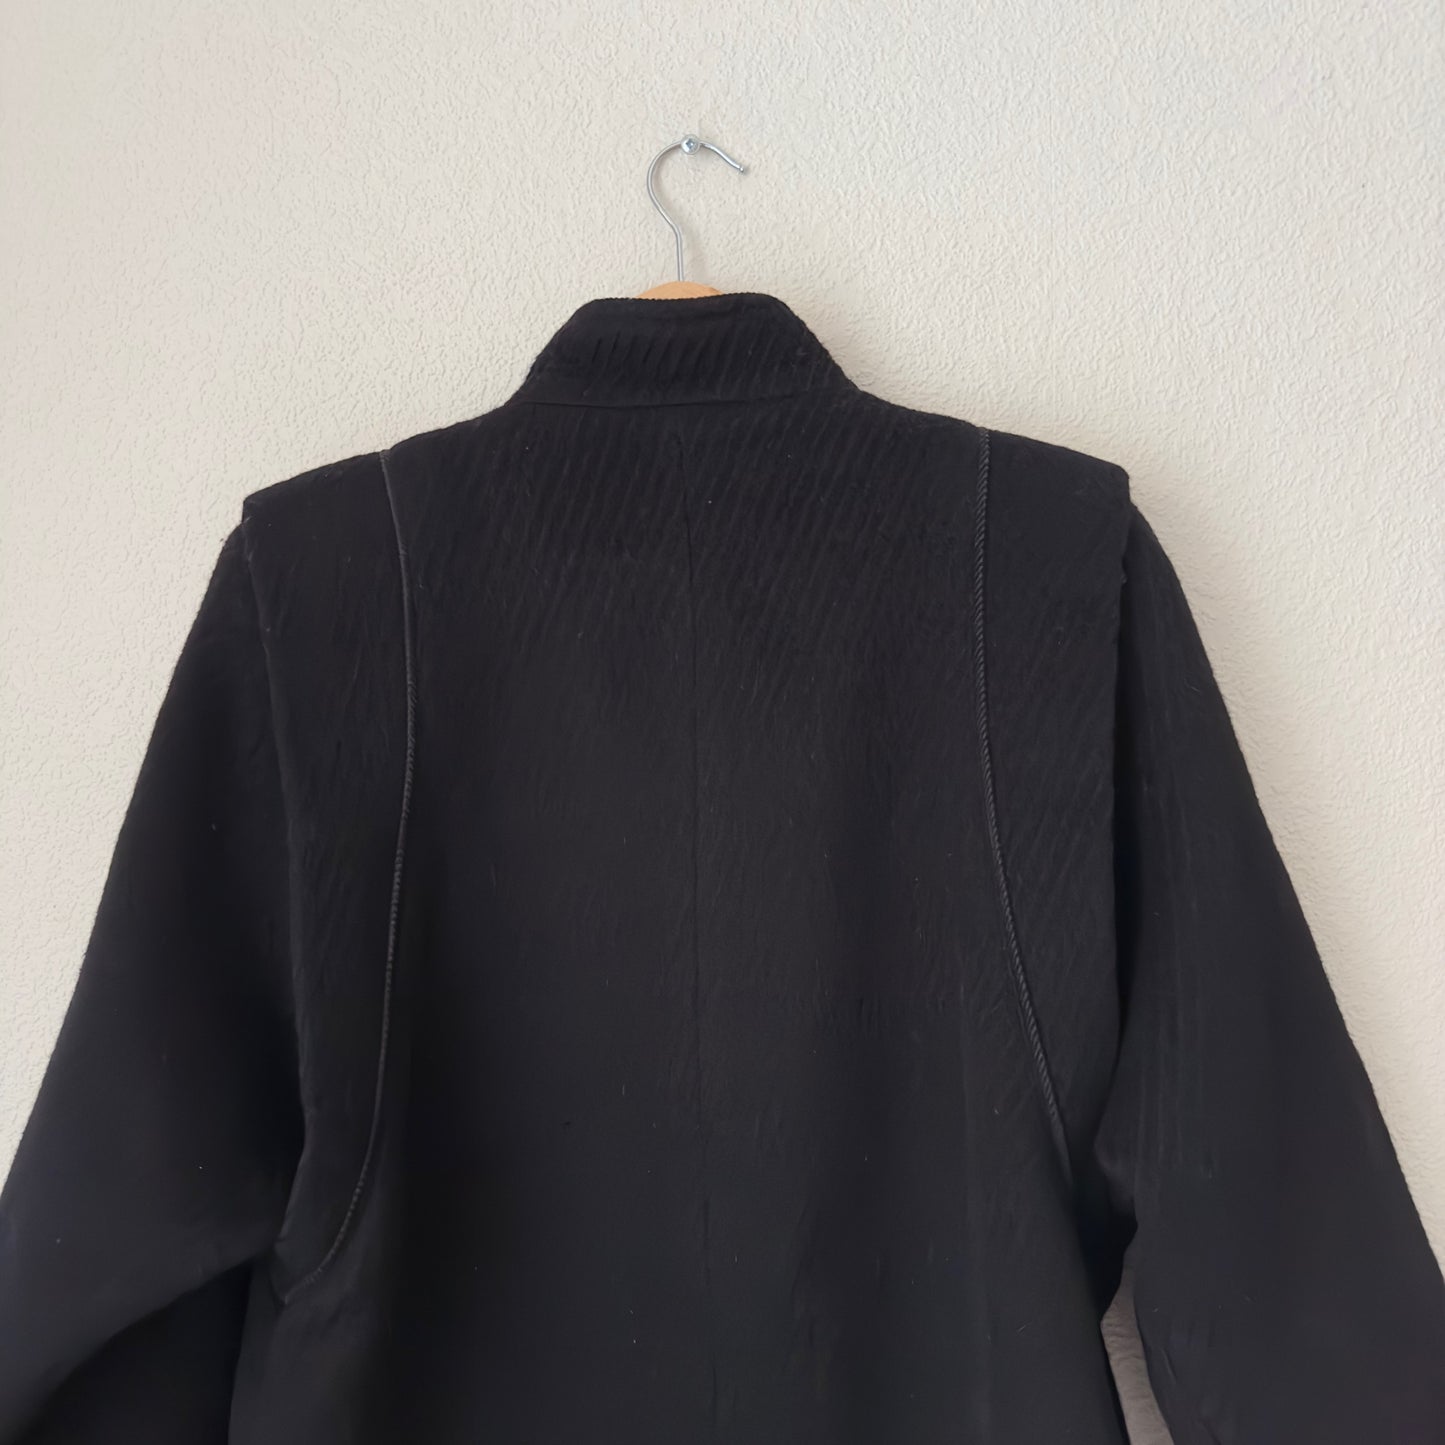 Vintage Black Wool Coat - size S